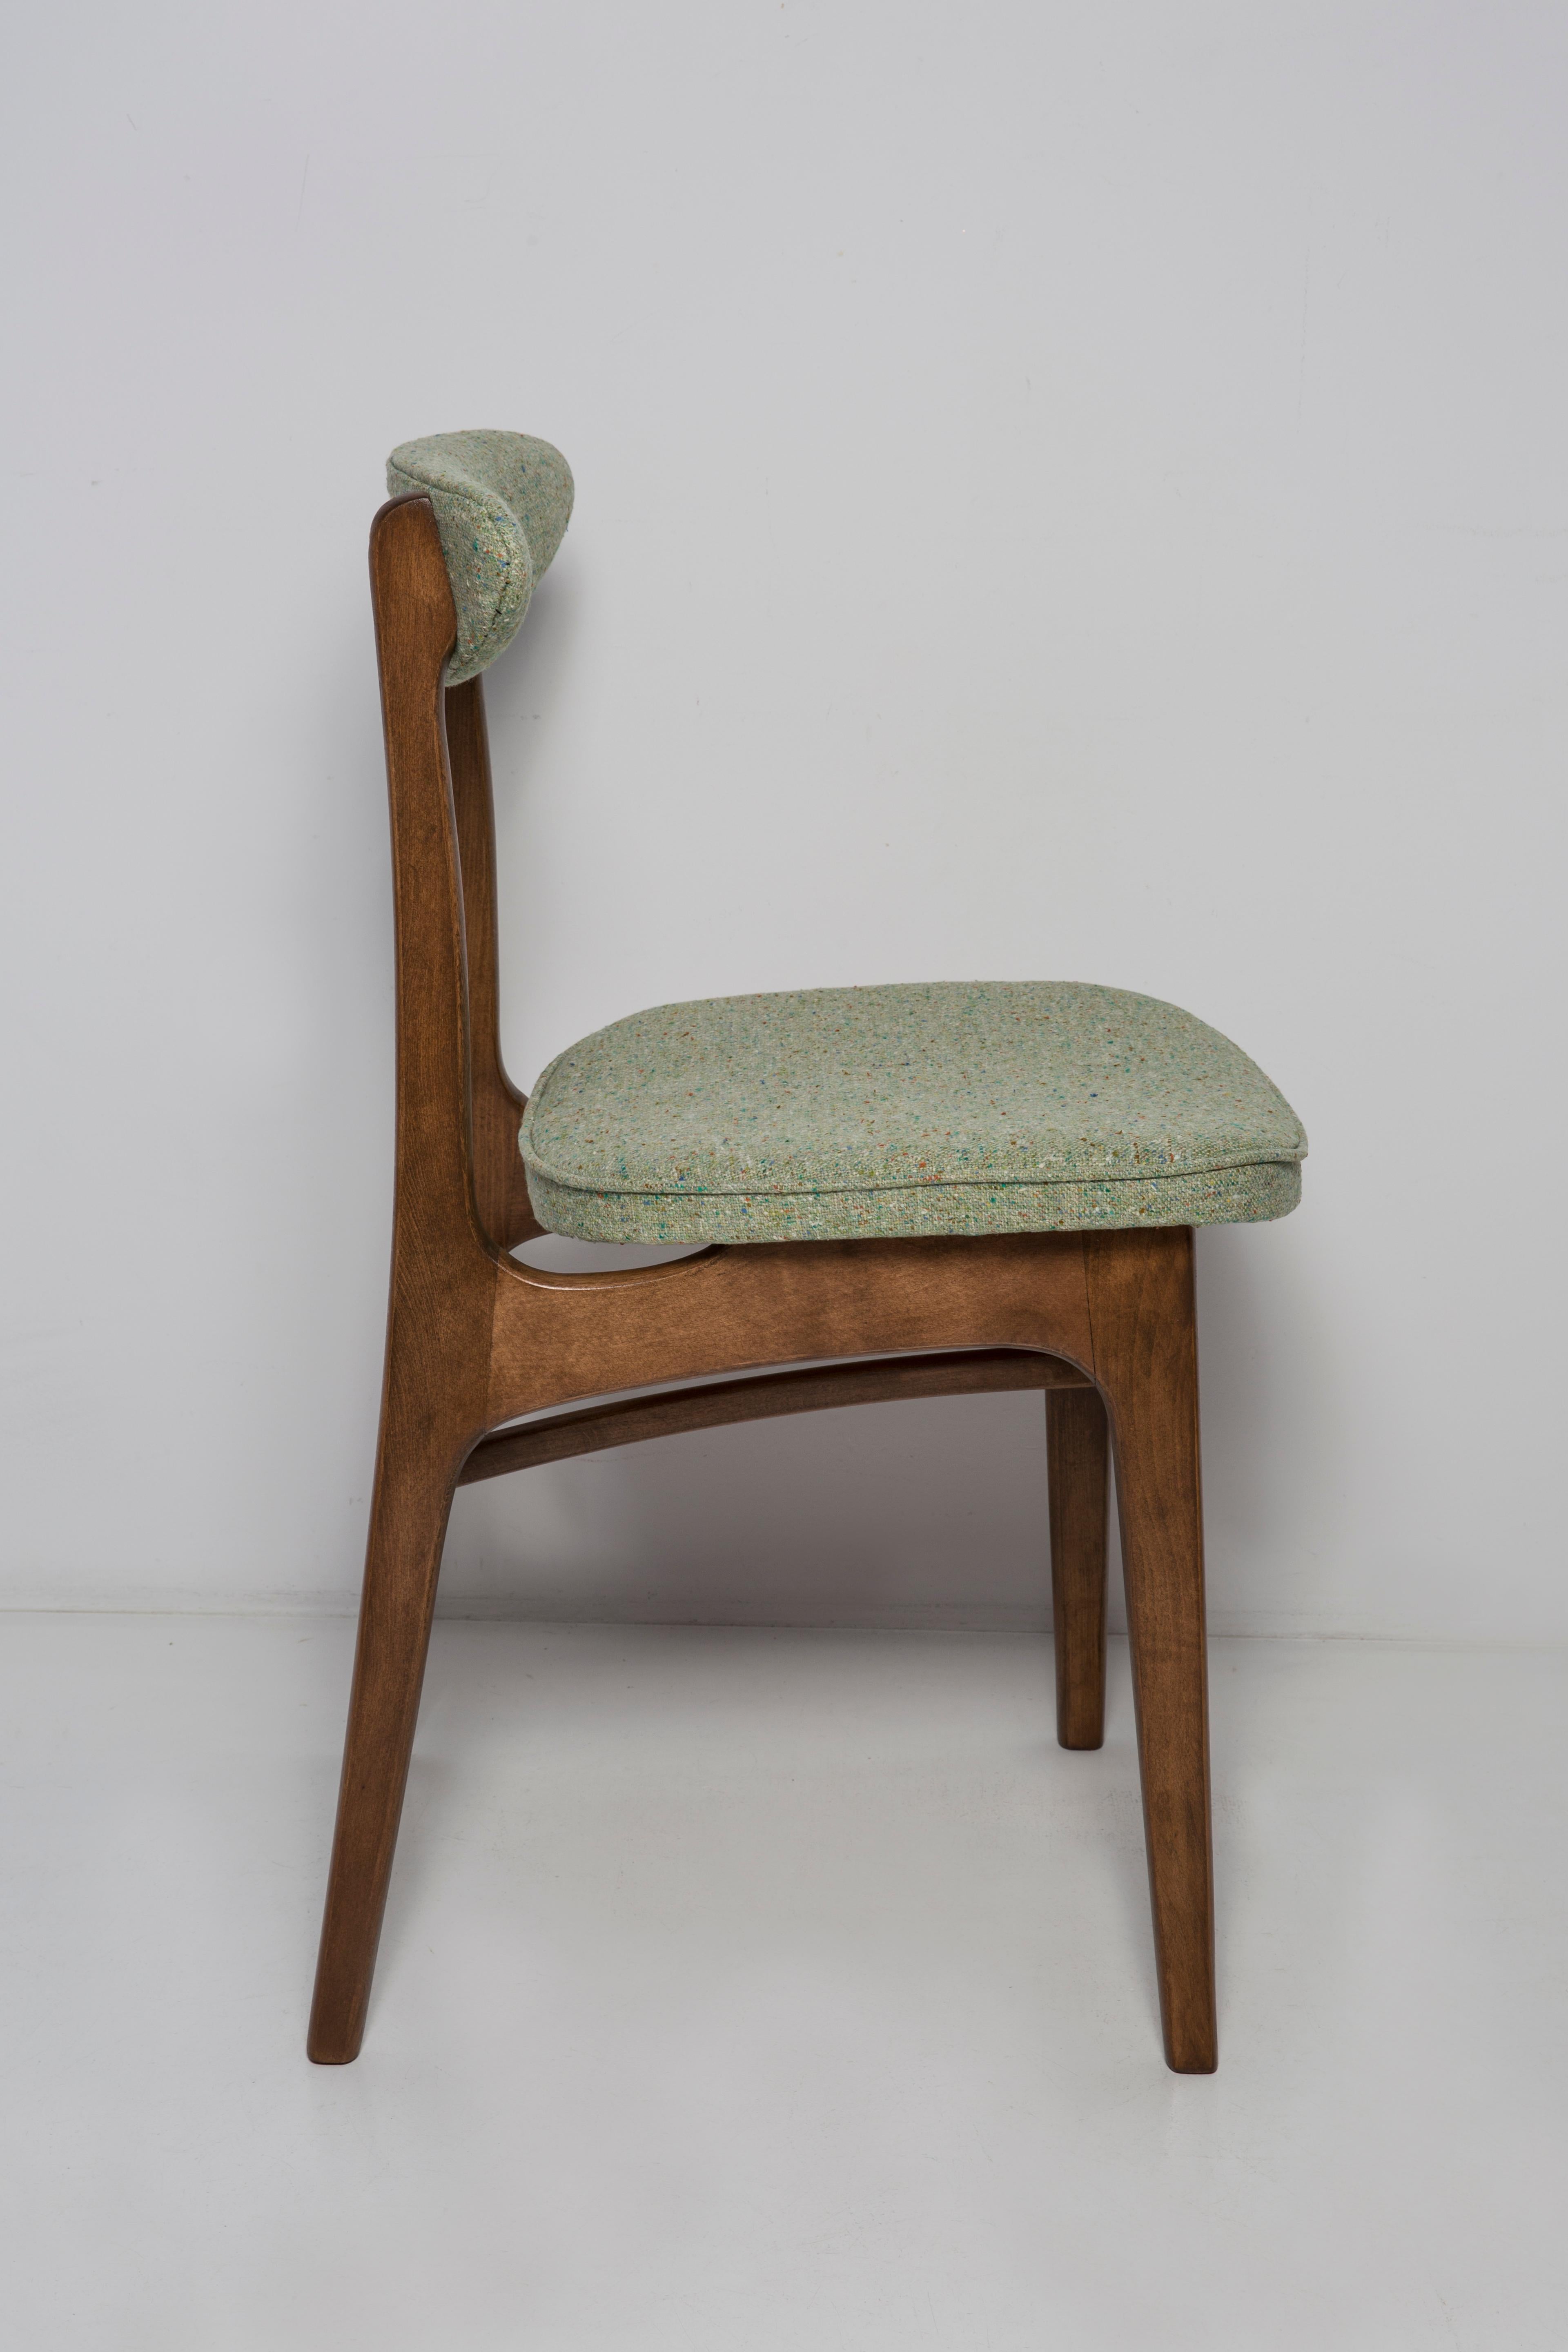 Hand-Crafted Mid Century Apple Green Wool Chair, Walnut Wood, Rajmund Halas, Poland, 1960s For Sale